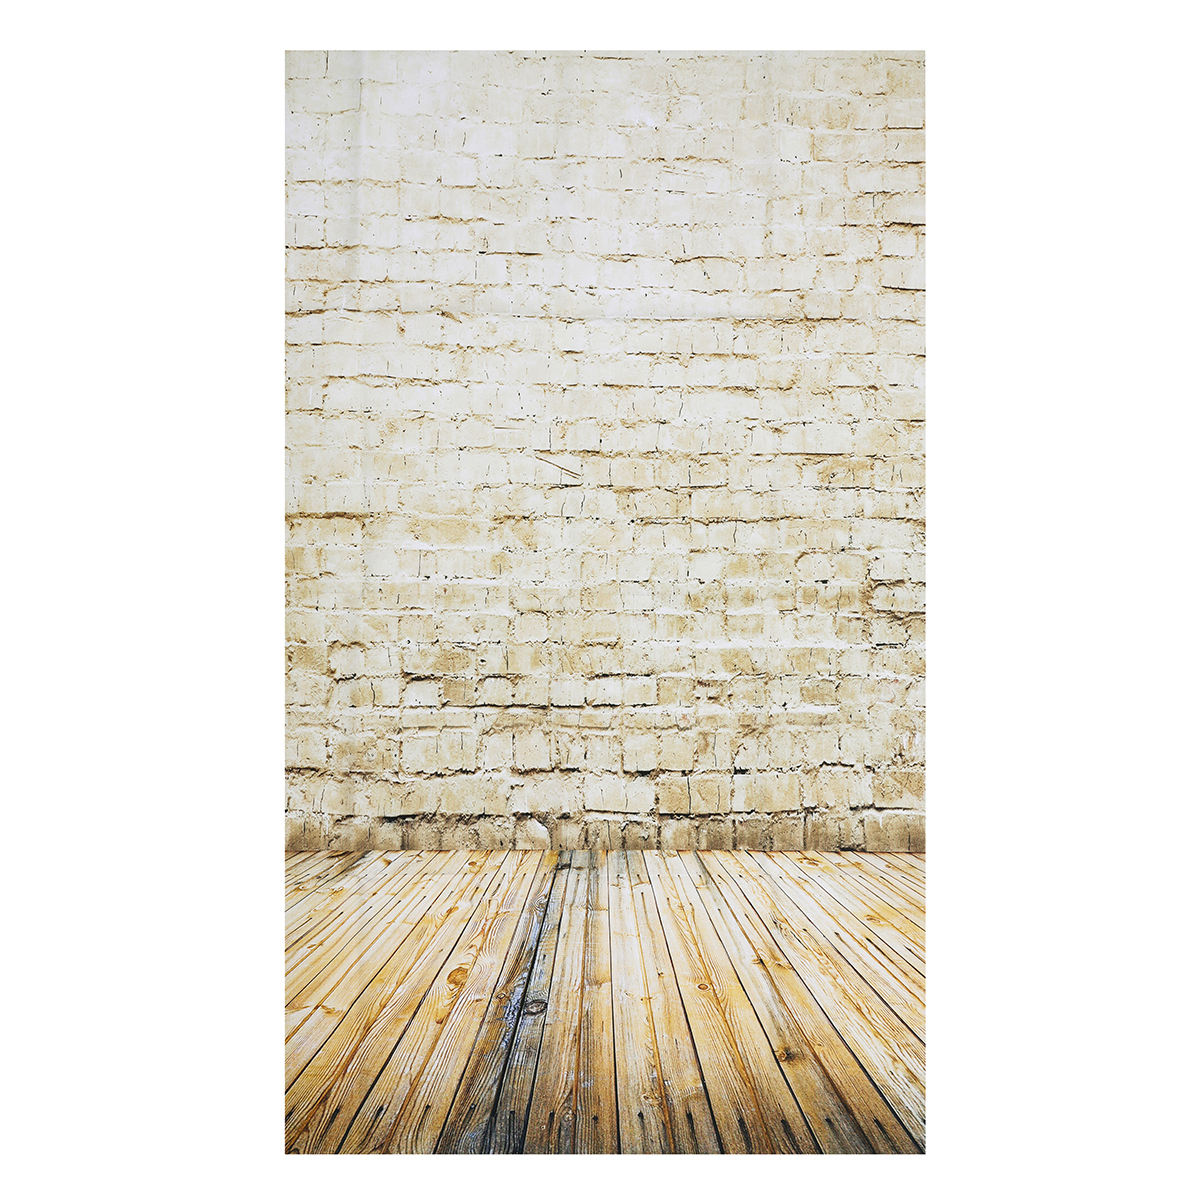 Mohoo-15x21m-Beige-Brick-Wall-Wooden-Floor-Studio-Props-Photography-Backdrop-Background-Silk-Materia-1958161-2